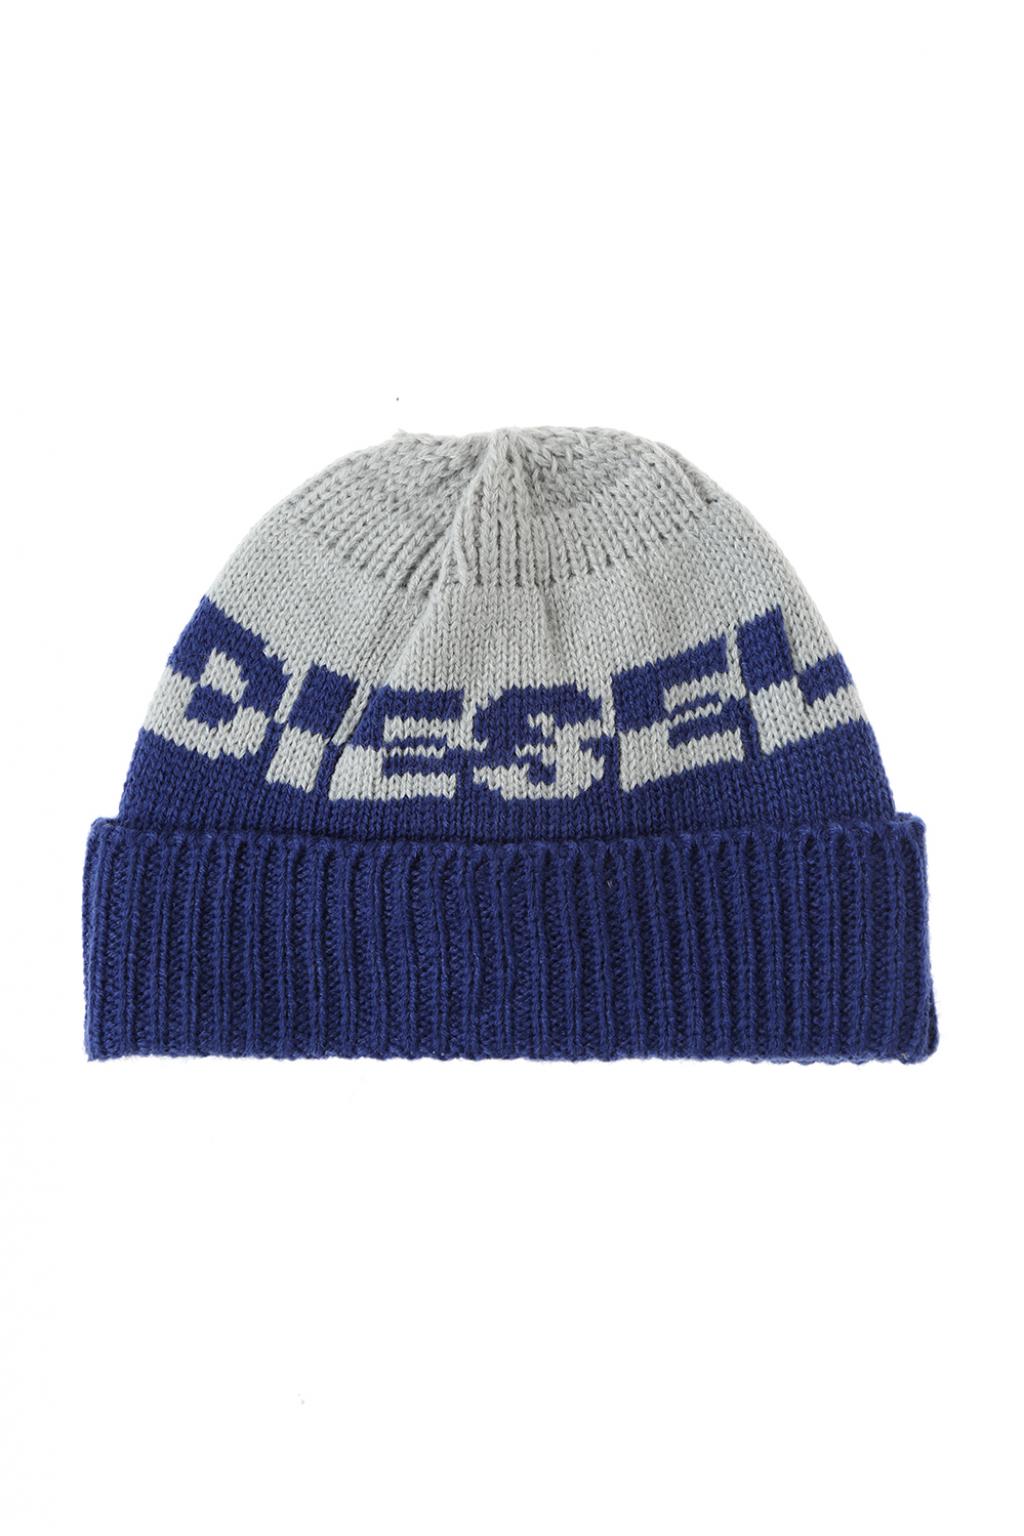 Diesel Kids Logo hat